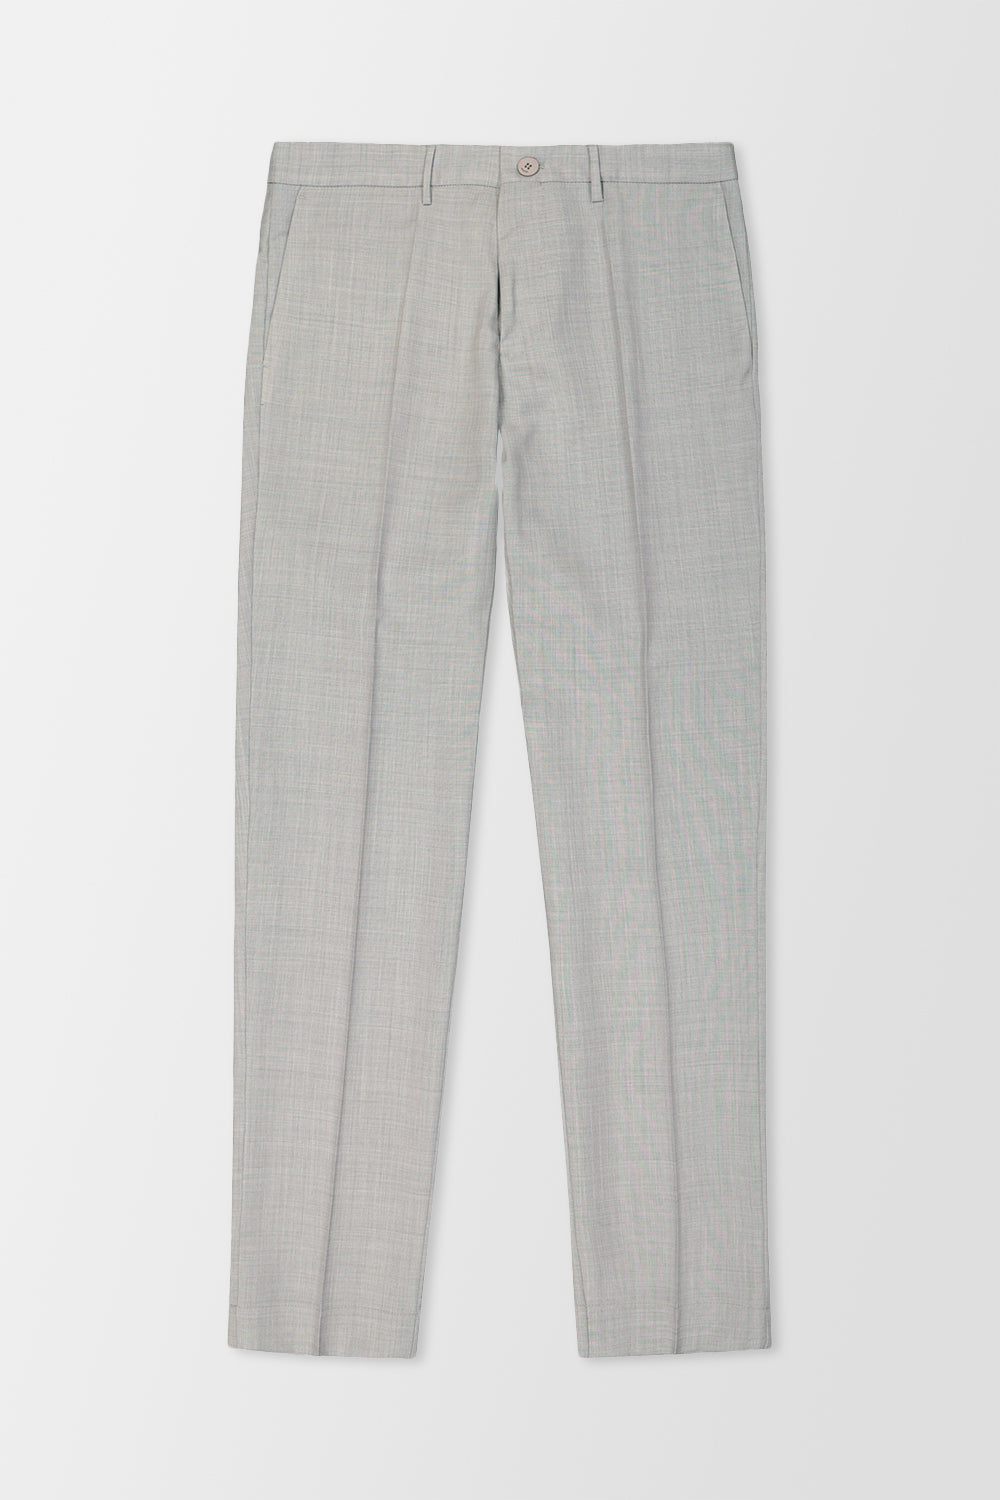 Incotex Light Grey Classic Trousers